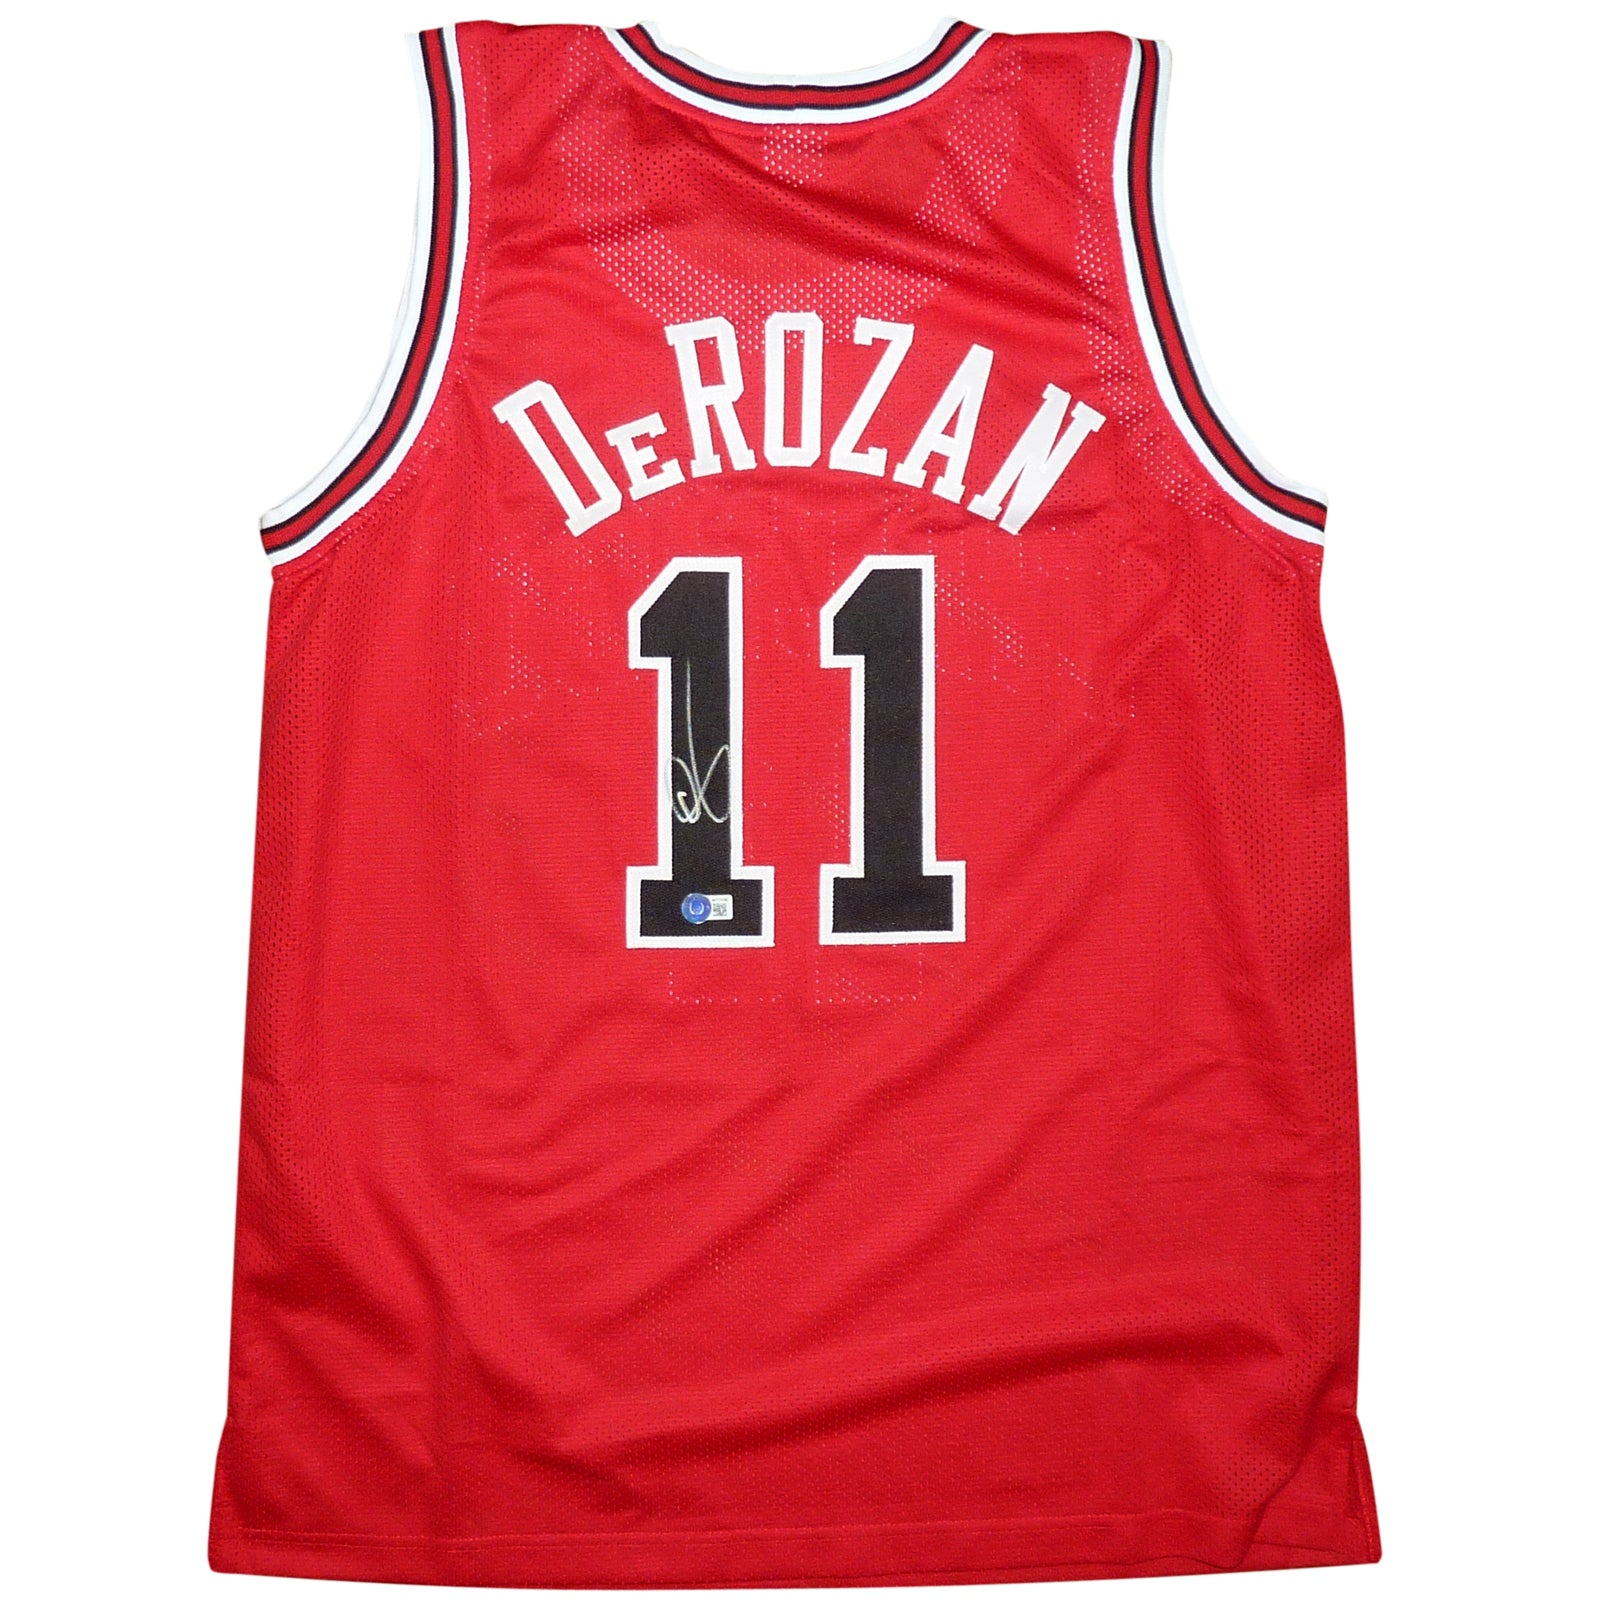 Demar DeRozan Signed Autographed Toronto Raptors Basketball Jersey